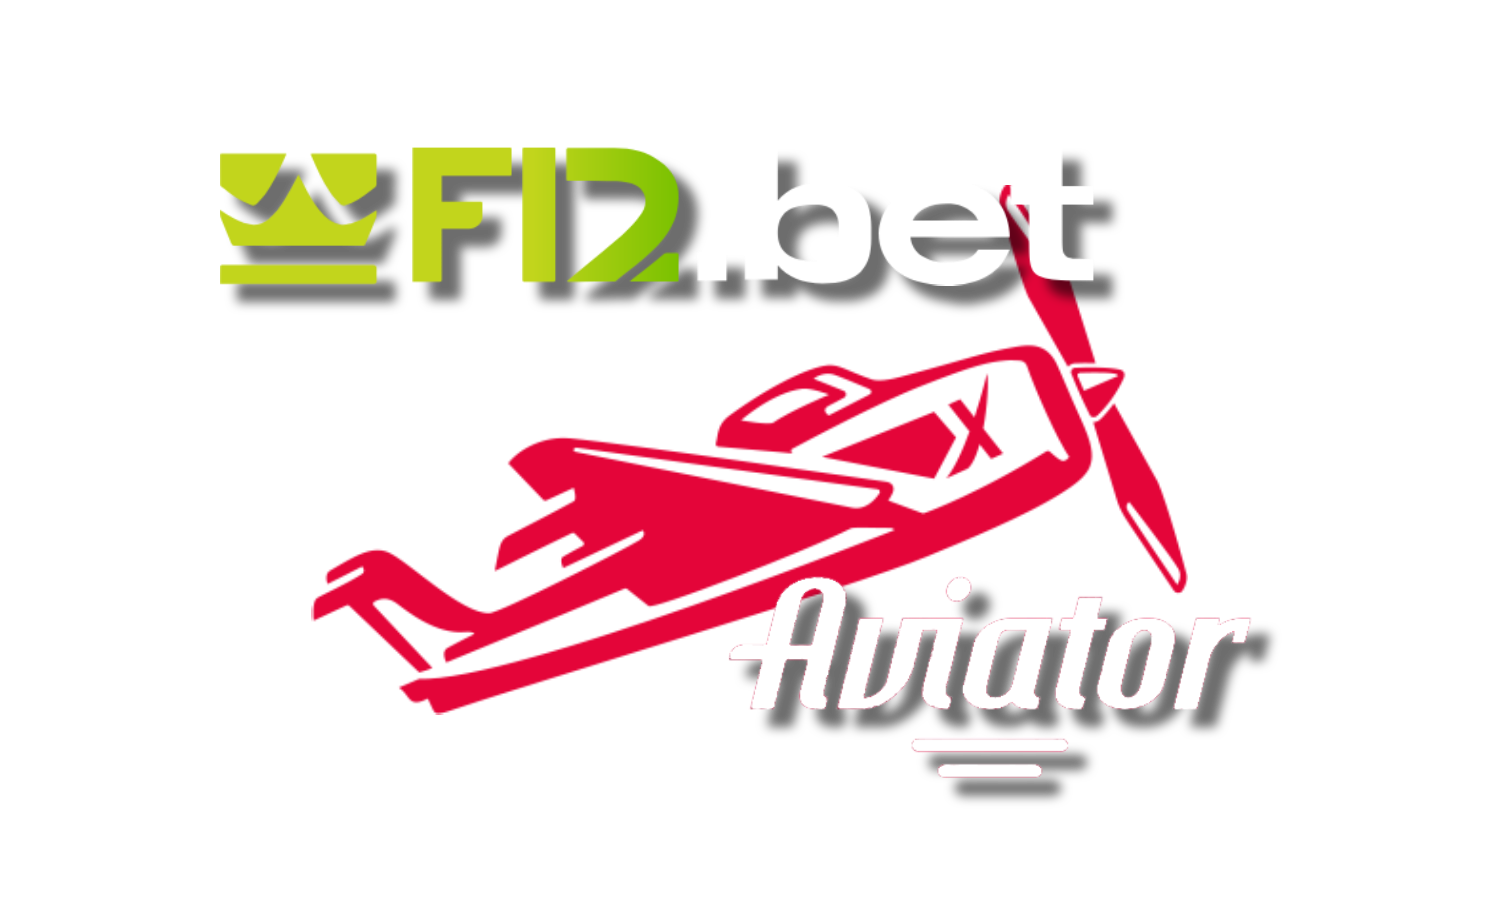 logotipos f12bet e aviador